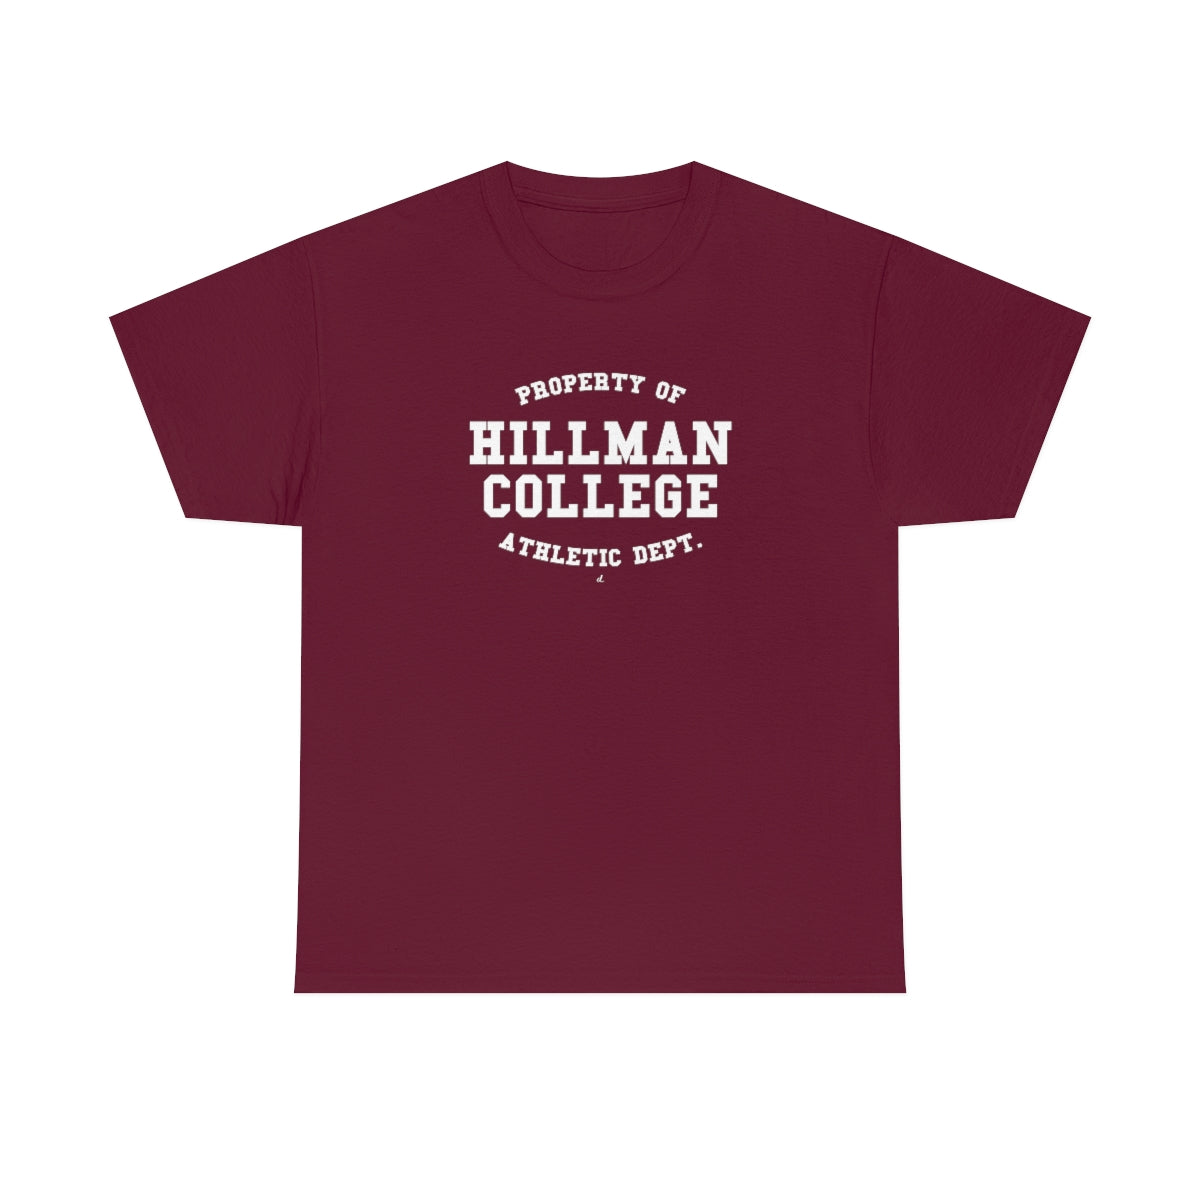 Hillman College Athletic Dept.: White Lettering Unisex Short Sleeve Tee